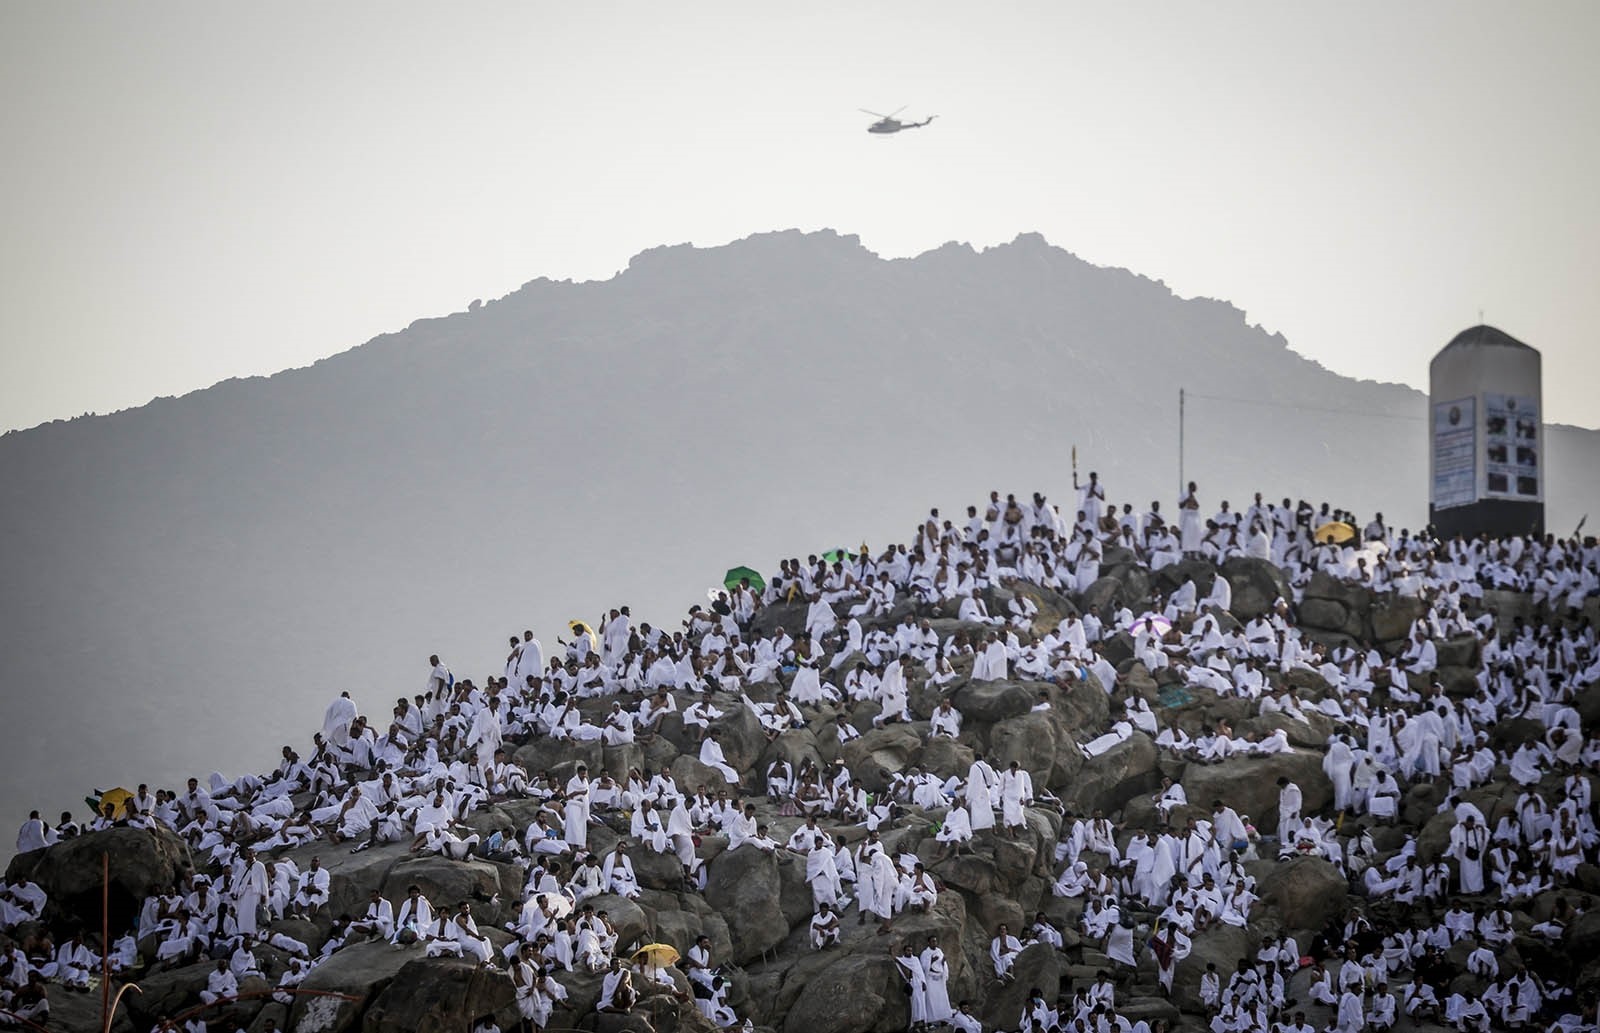 Muslim worshippers gather during the Hajj pilgrimage on the Mount Arafat, near Mecca, Saudi Arabia, 31 August 2017 (EPA Photo)